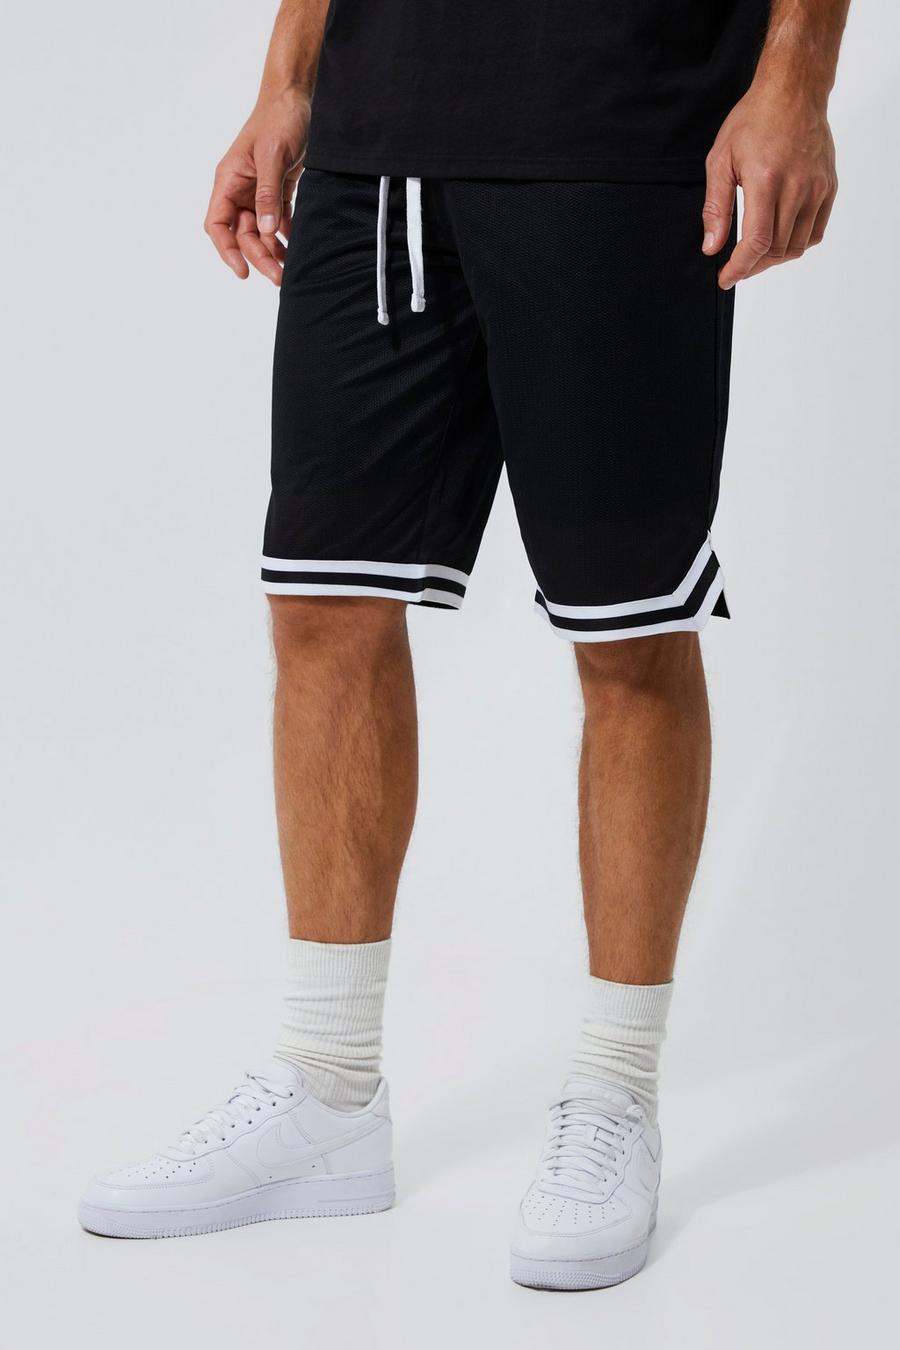 Pantalones cortos Tall de malla estilo baloncesto con cinta, Negro nero